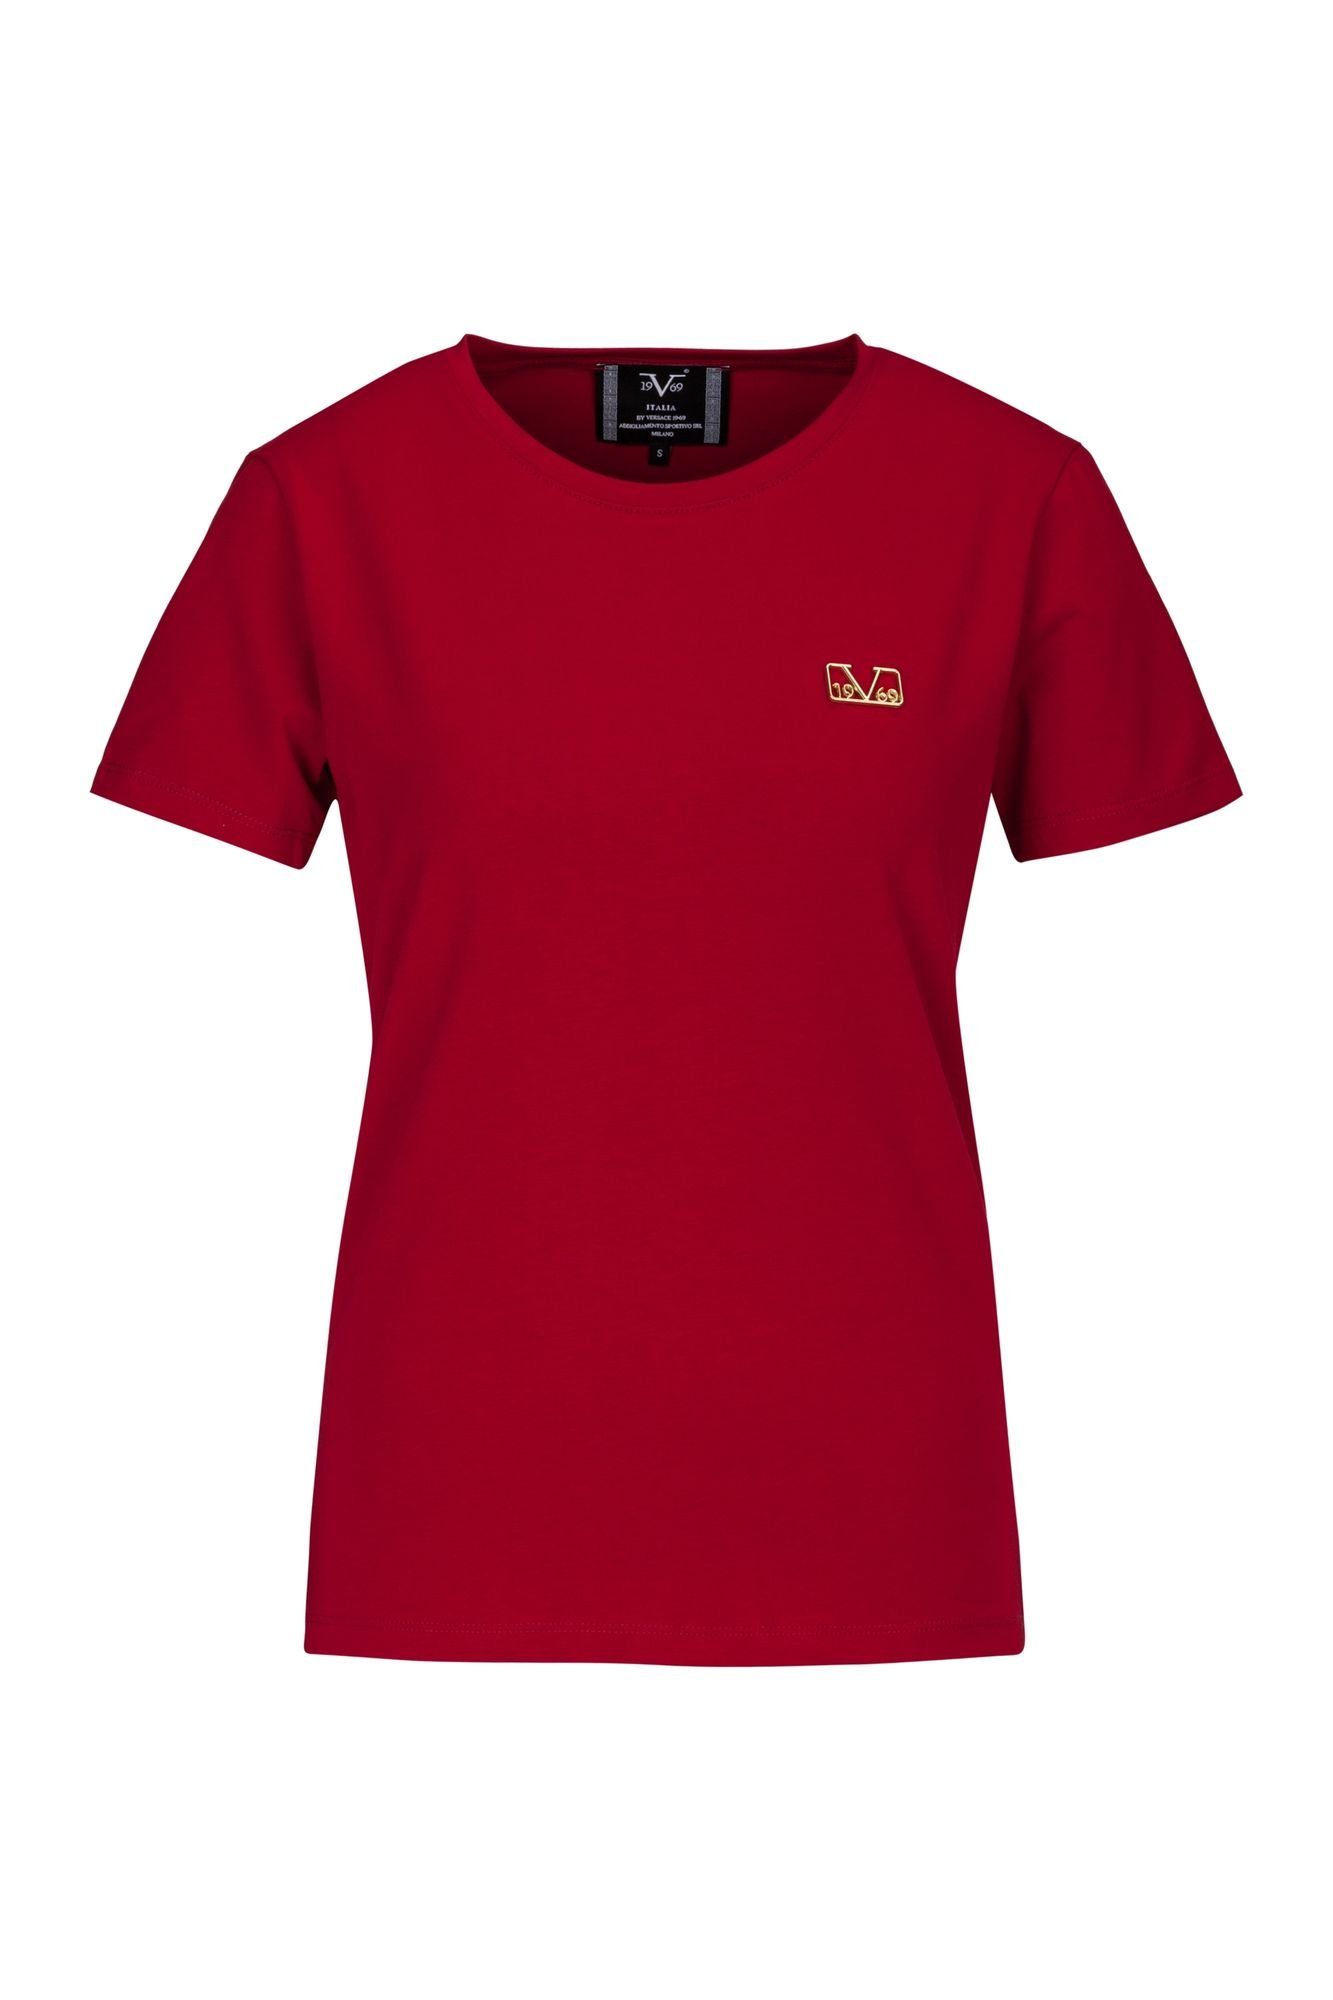 19V69 - Ella by Sportivo Versace SRL Italia RED Versace T-Shirt by